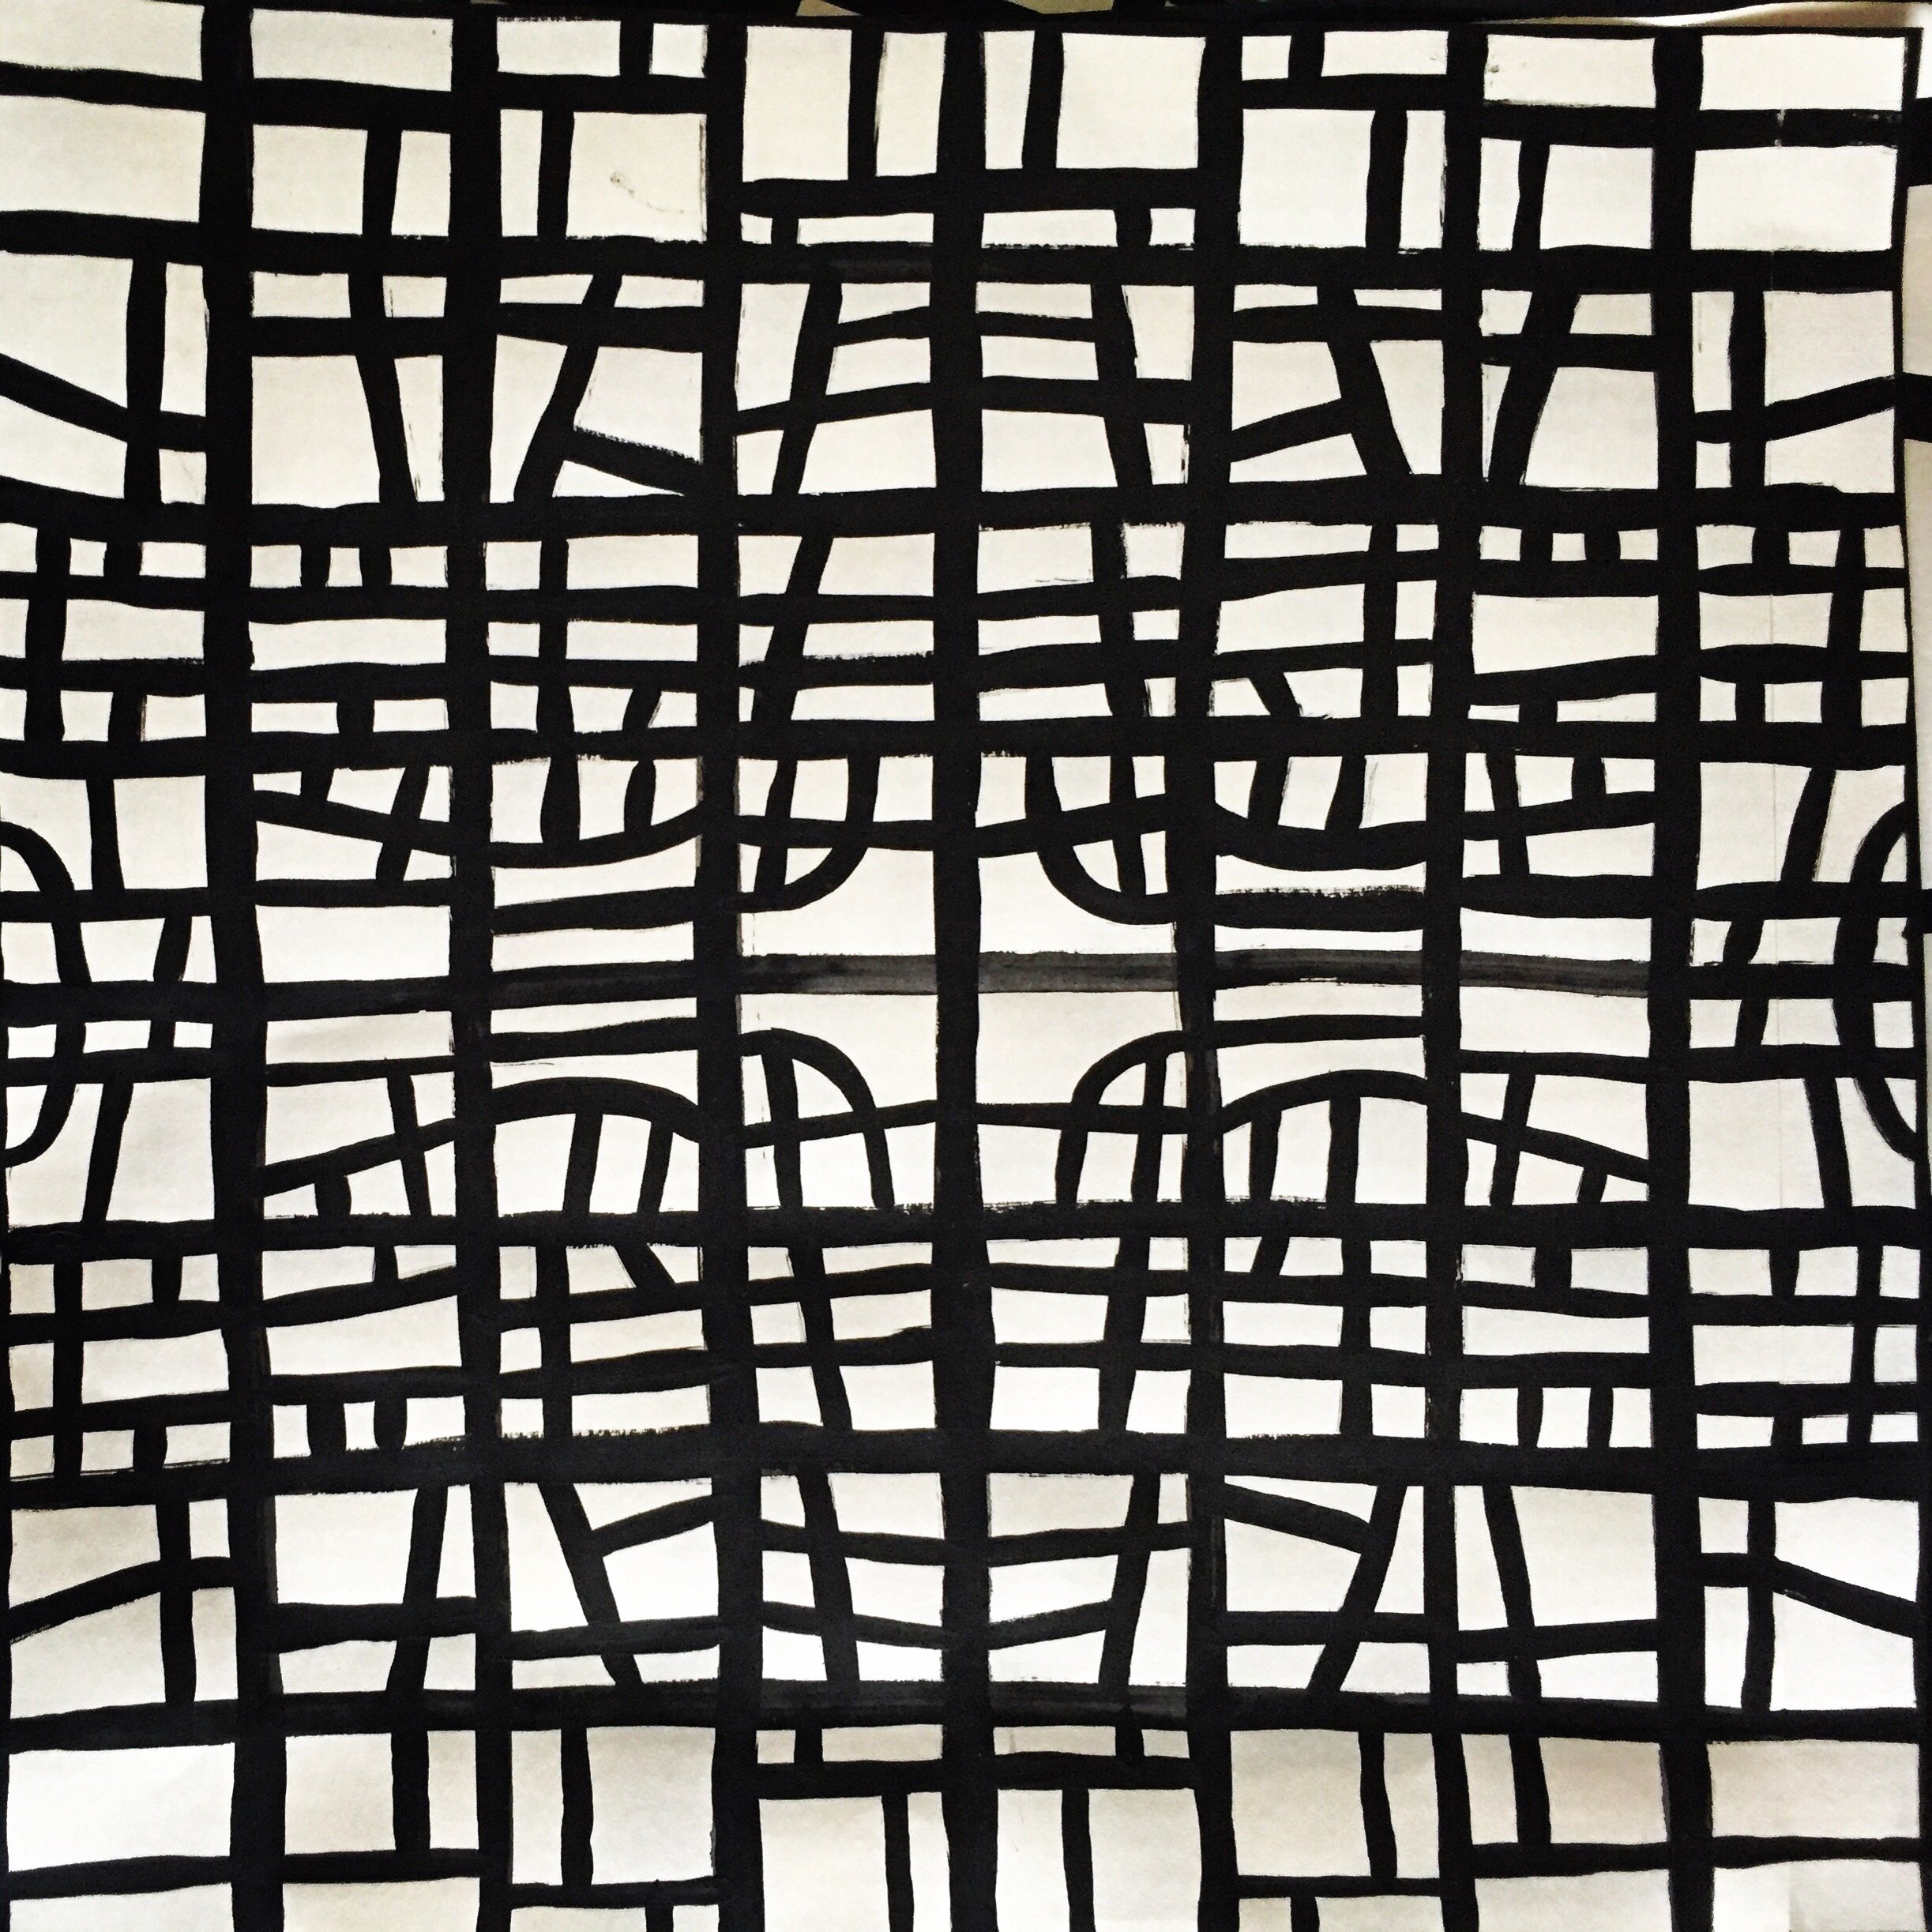 Metaesquema Grid, 2016. Black Ink.